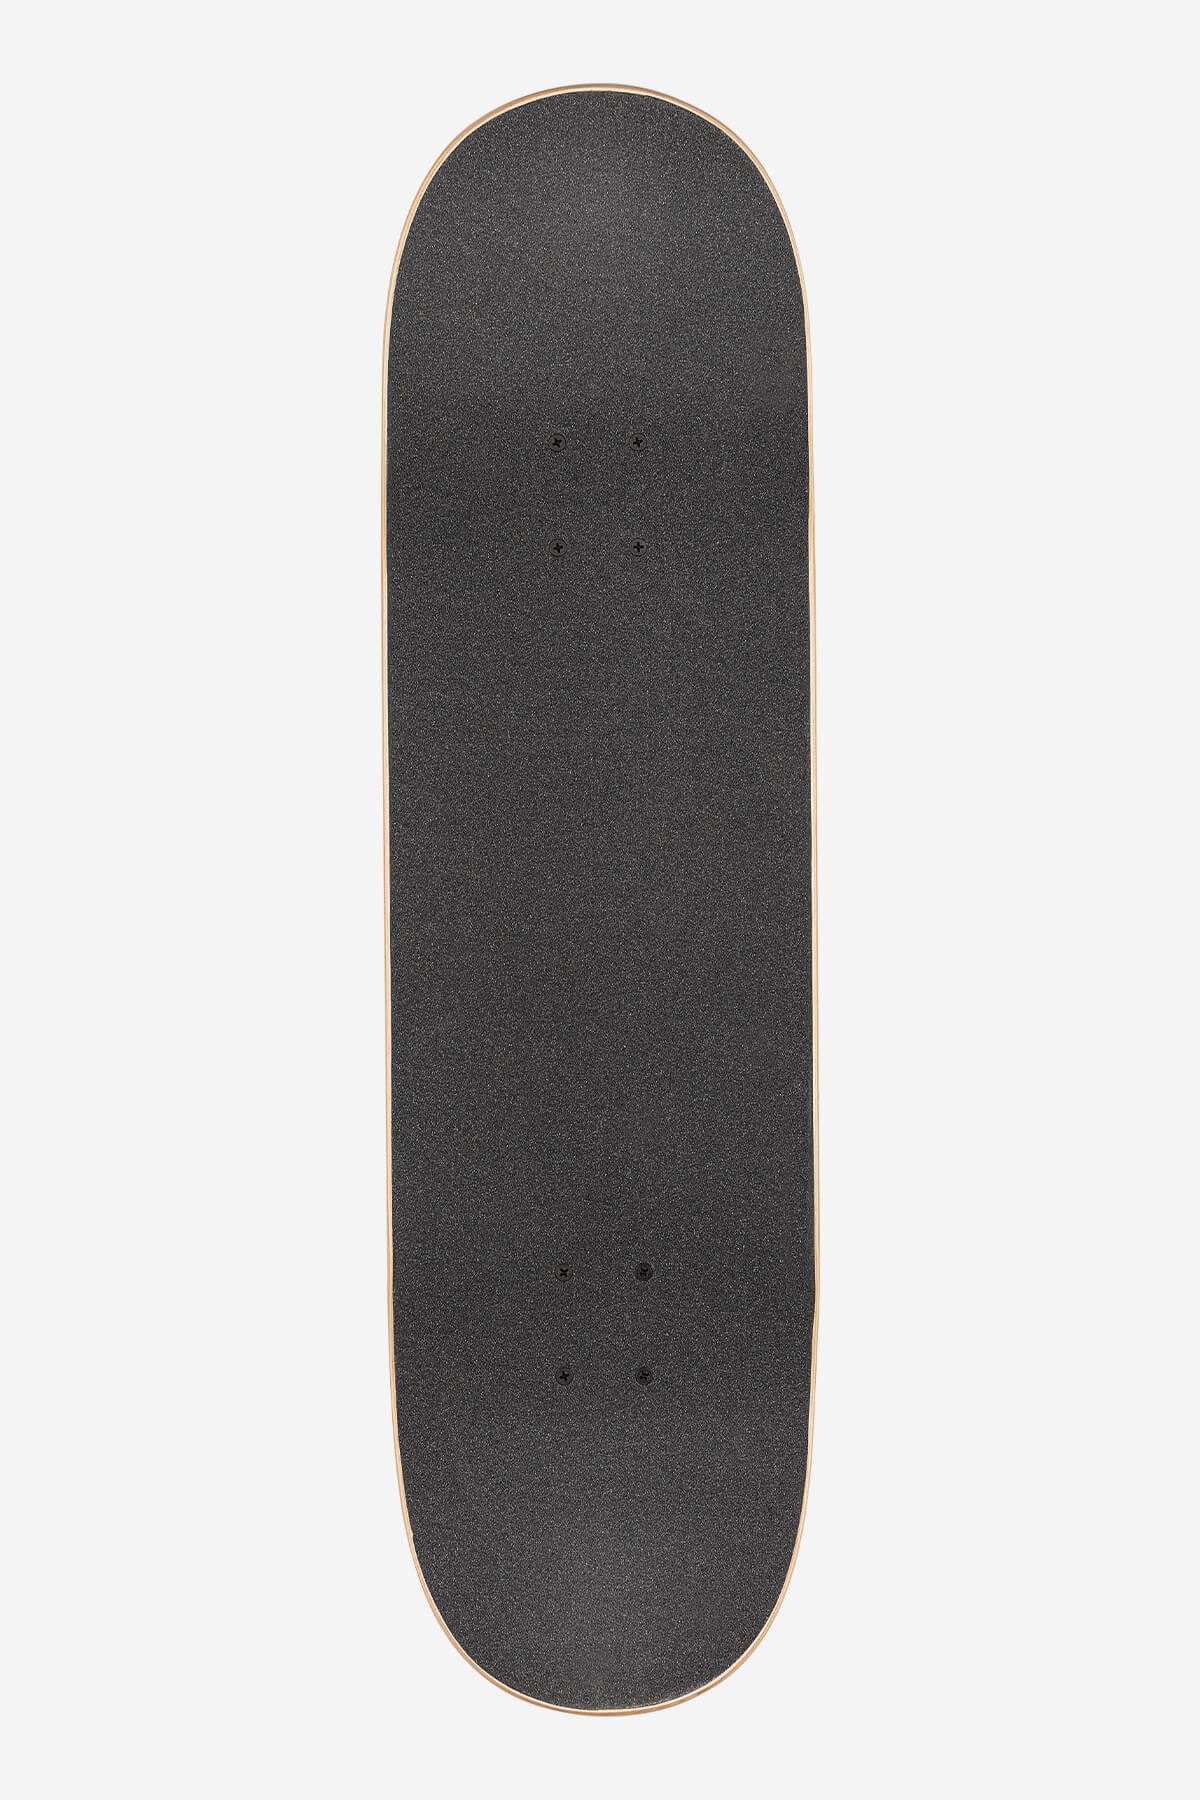 Globe - G1 Stack - Lone Palm - 8.0" Completo Skateboard